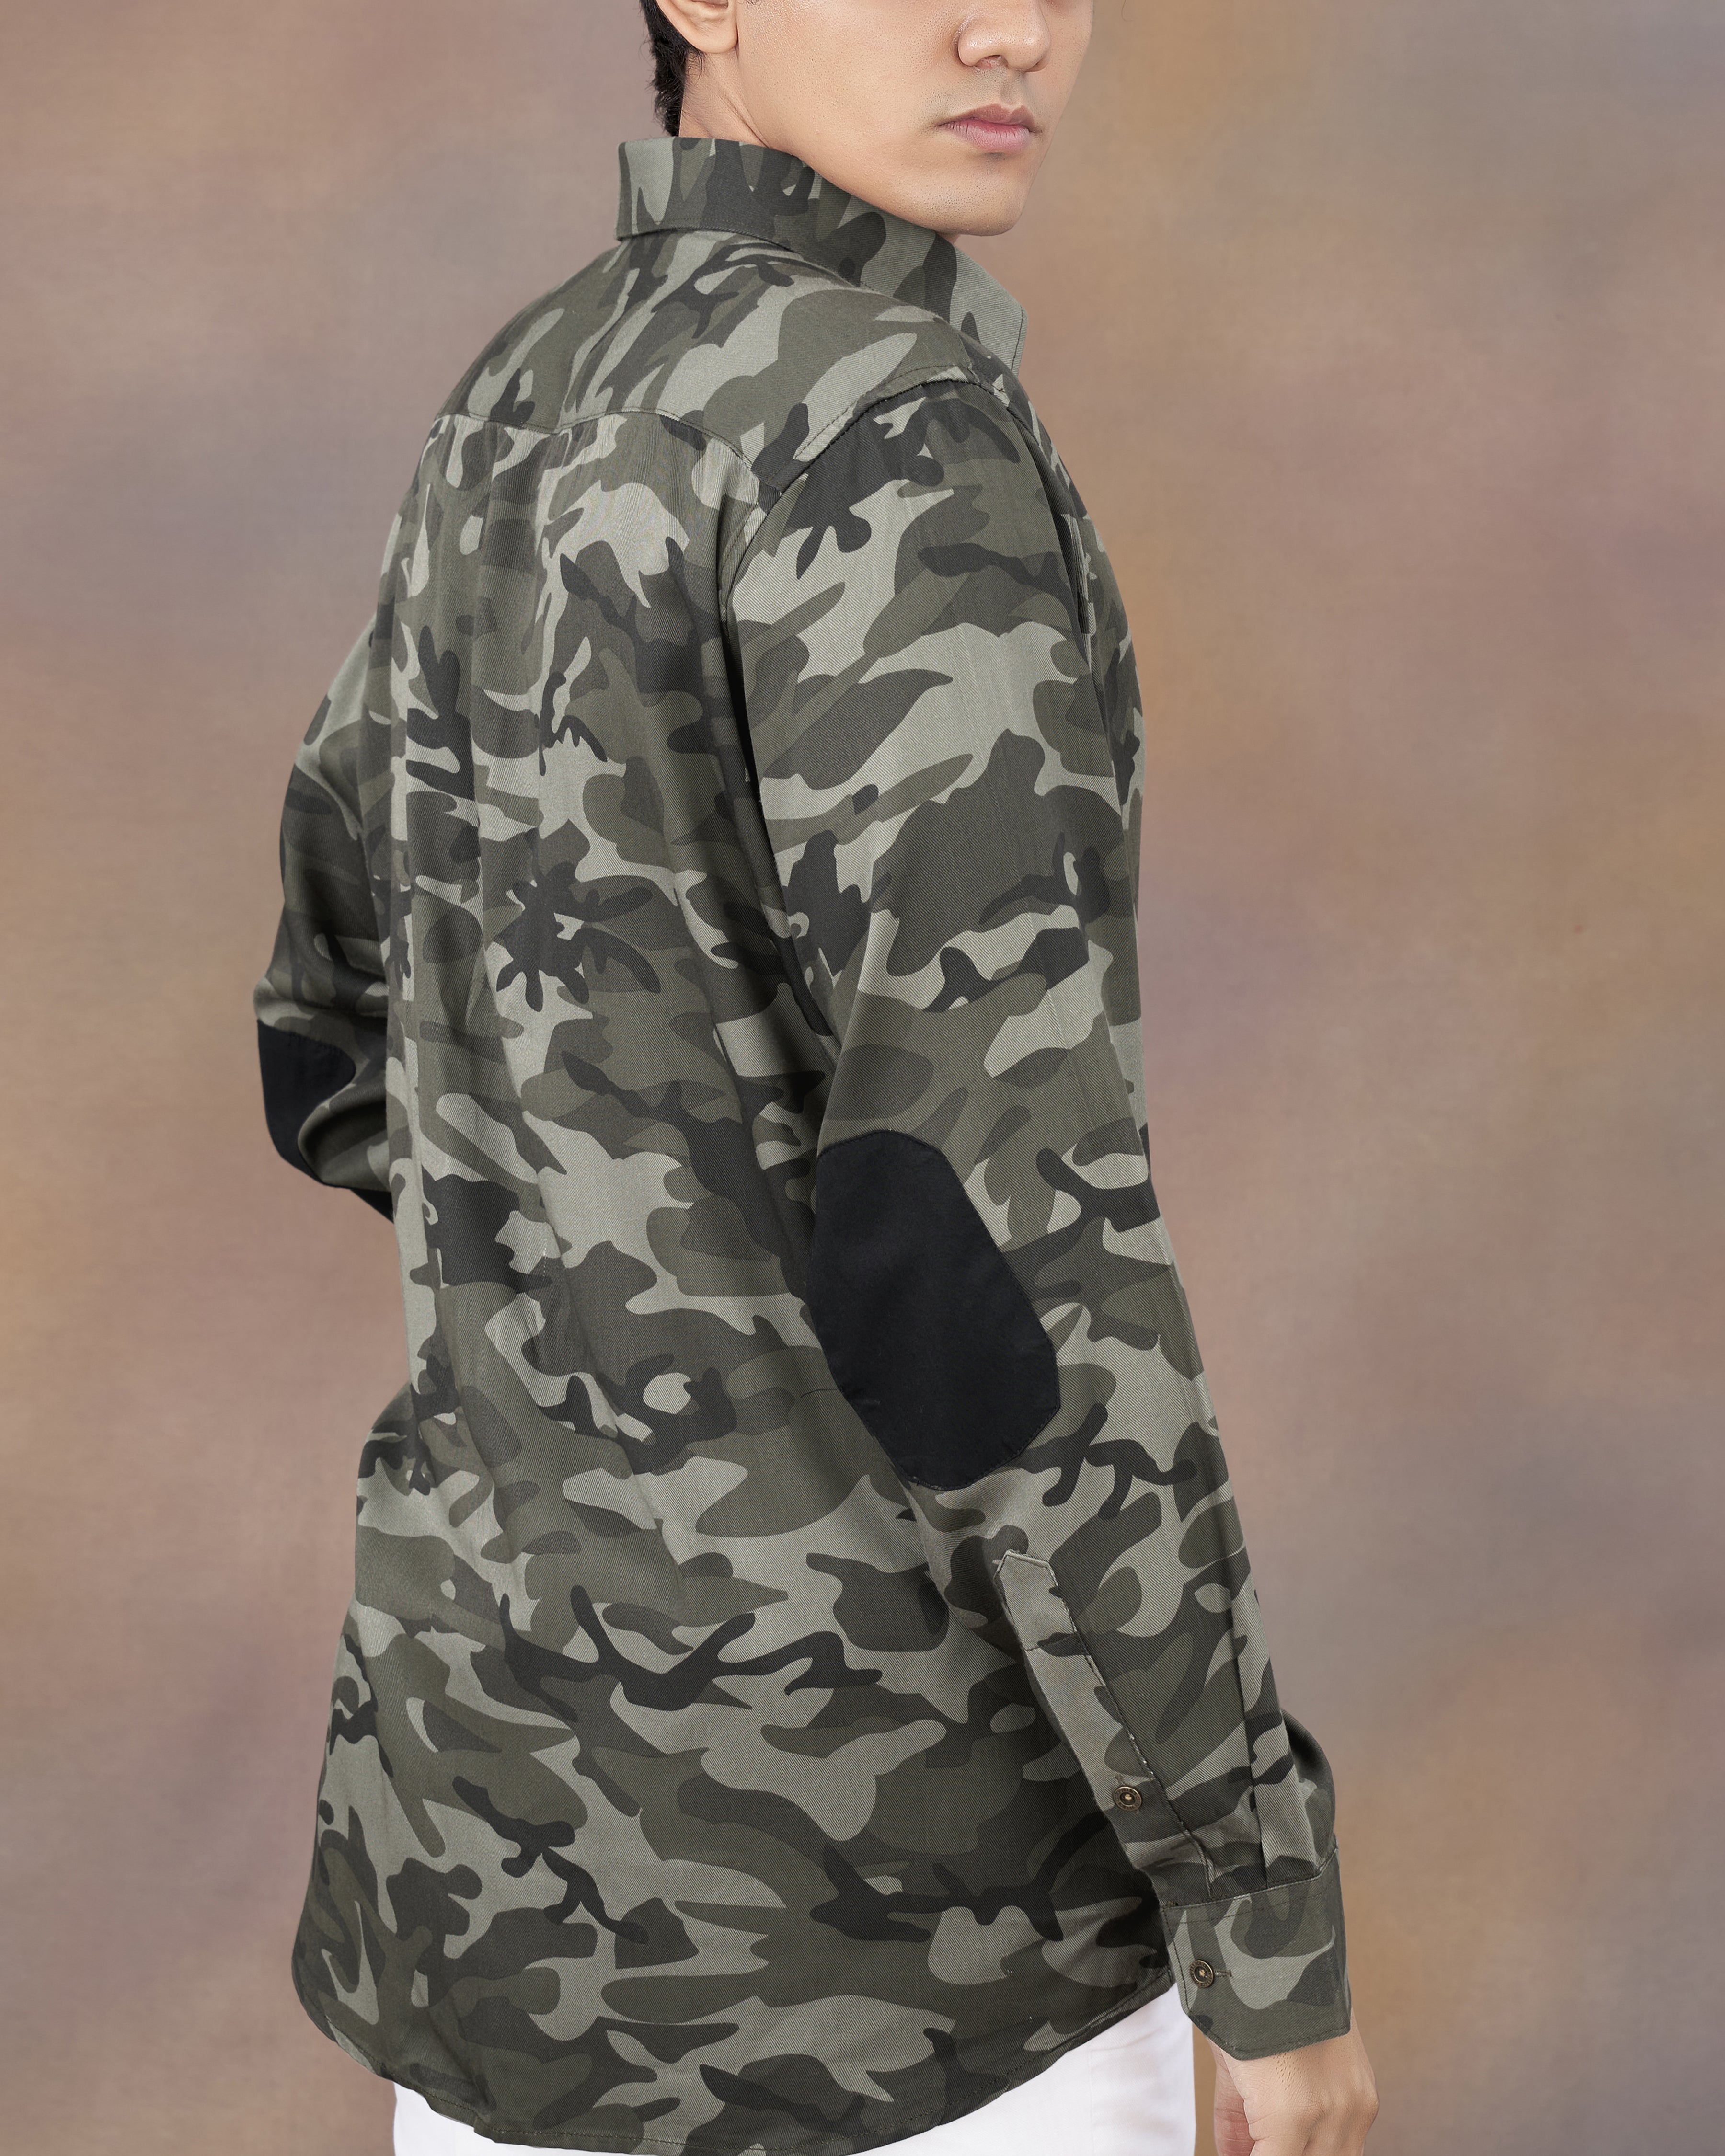 Fuscous Green with Mirage Black Camouflage Military Printed Premium Tencel Designer Shirt